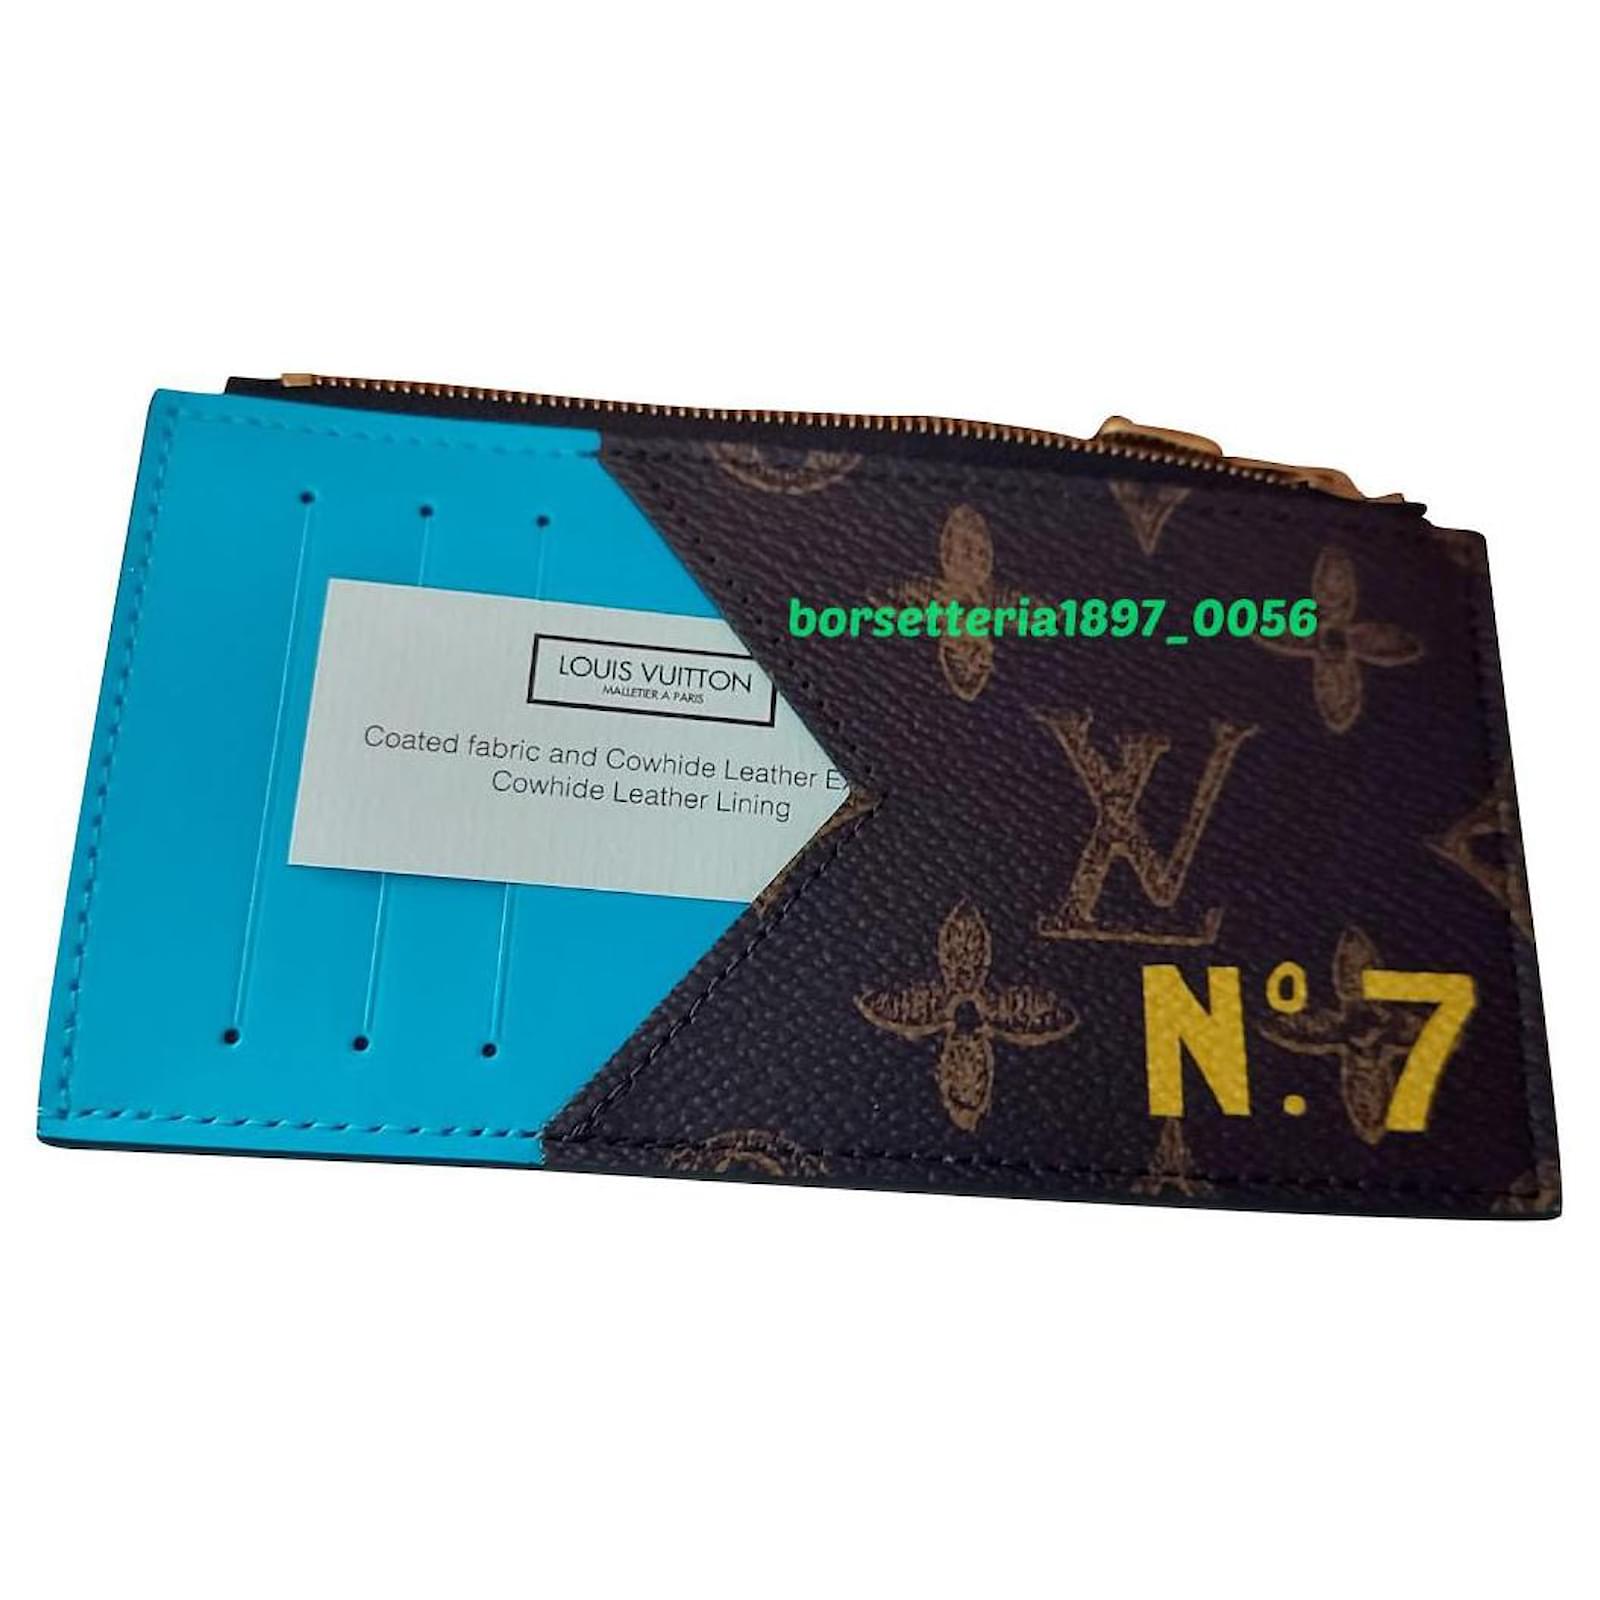 ًَ on X: #YUTA's invitation card from @LouisVuitton at #LVMenSS24